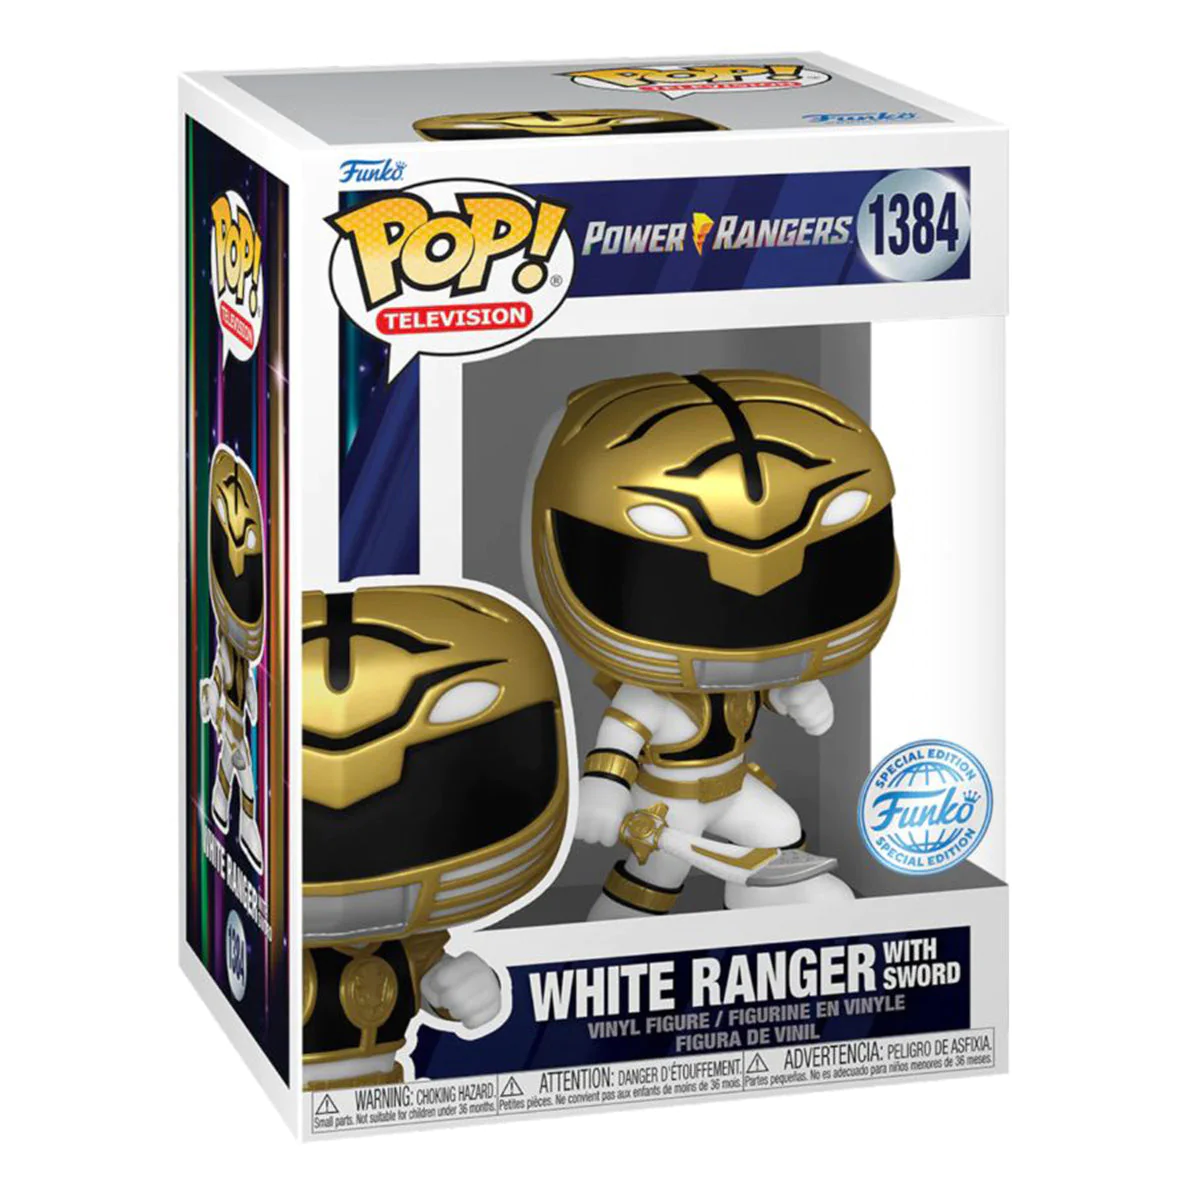 Power Rangers 30th Anniversary - White Ranger with Sword Pop! Vinyl